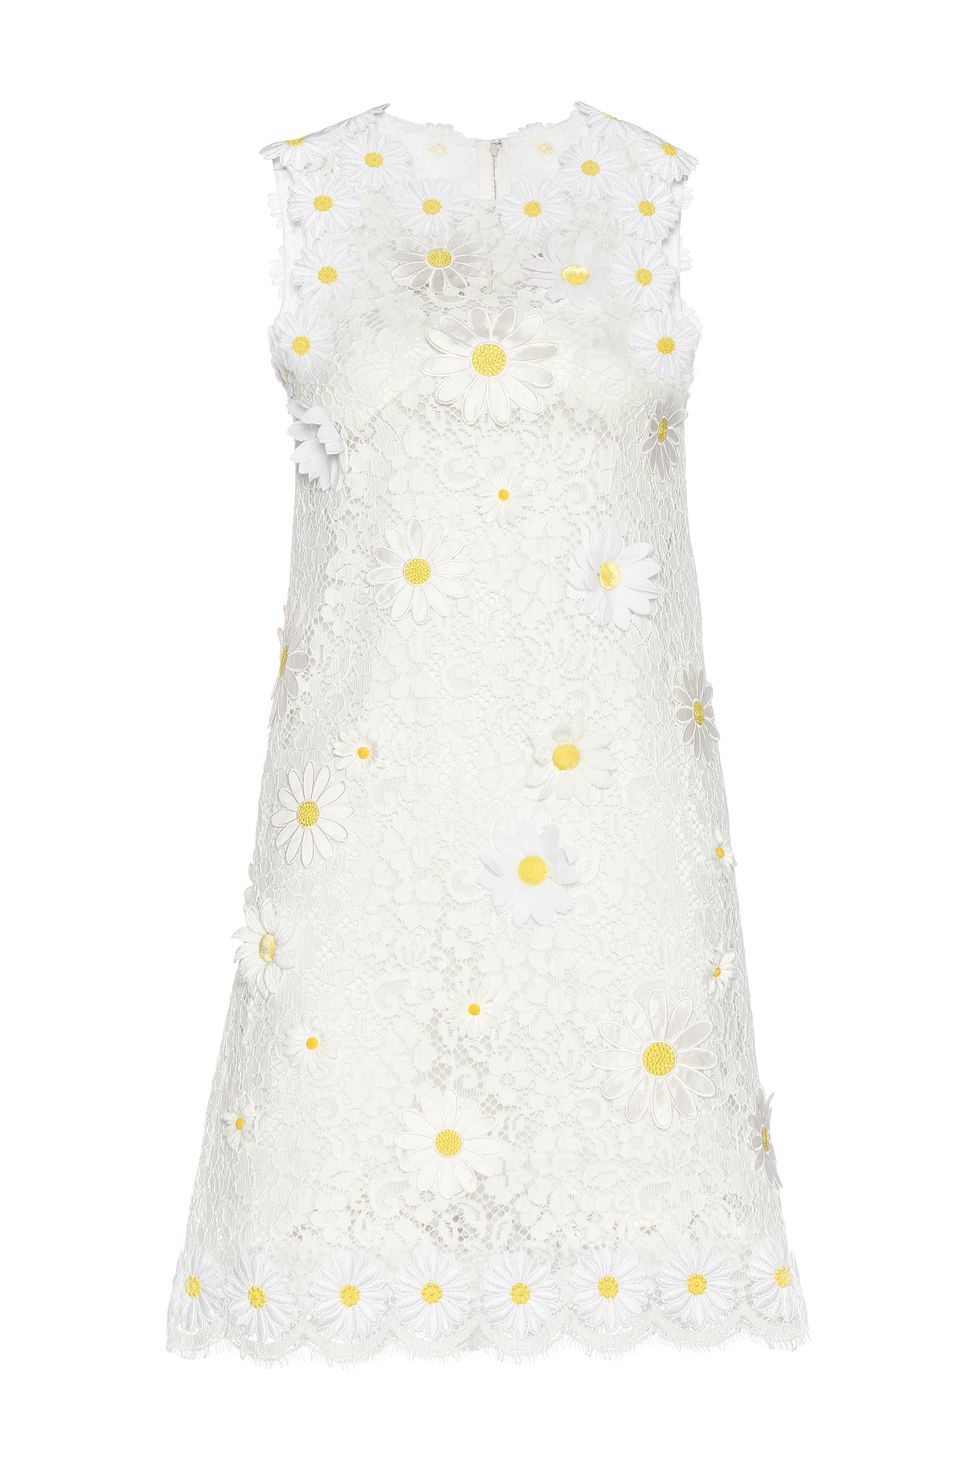 dolce and gabbana flower print dress